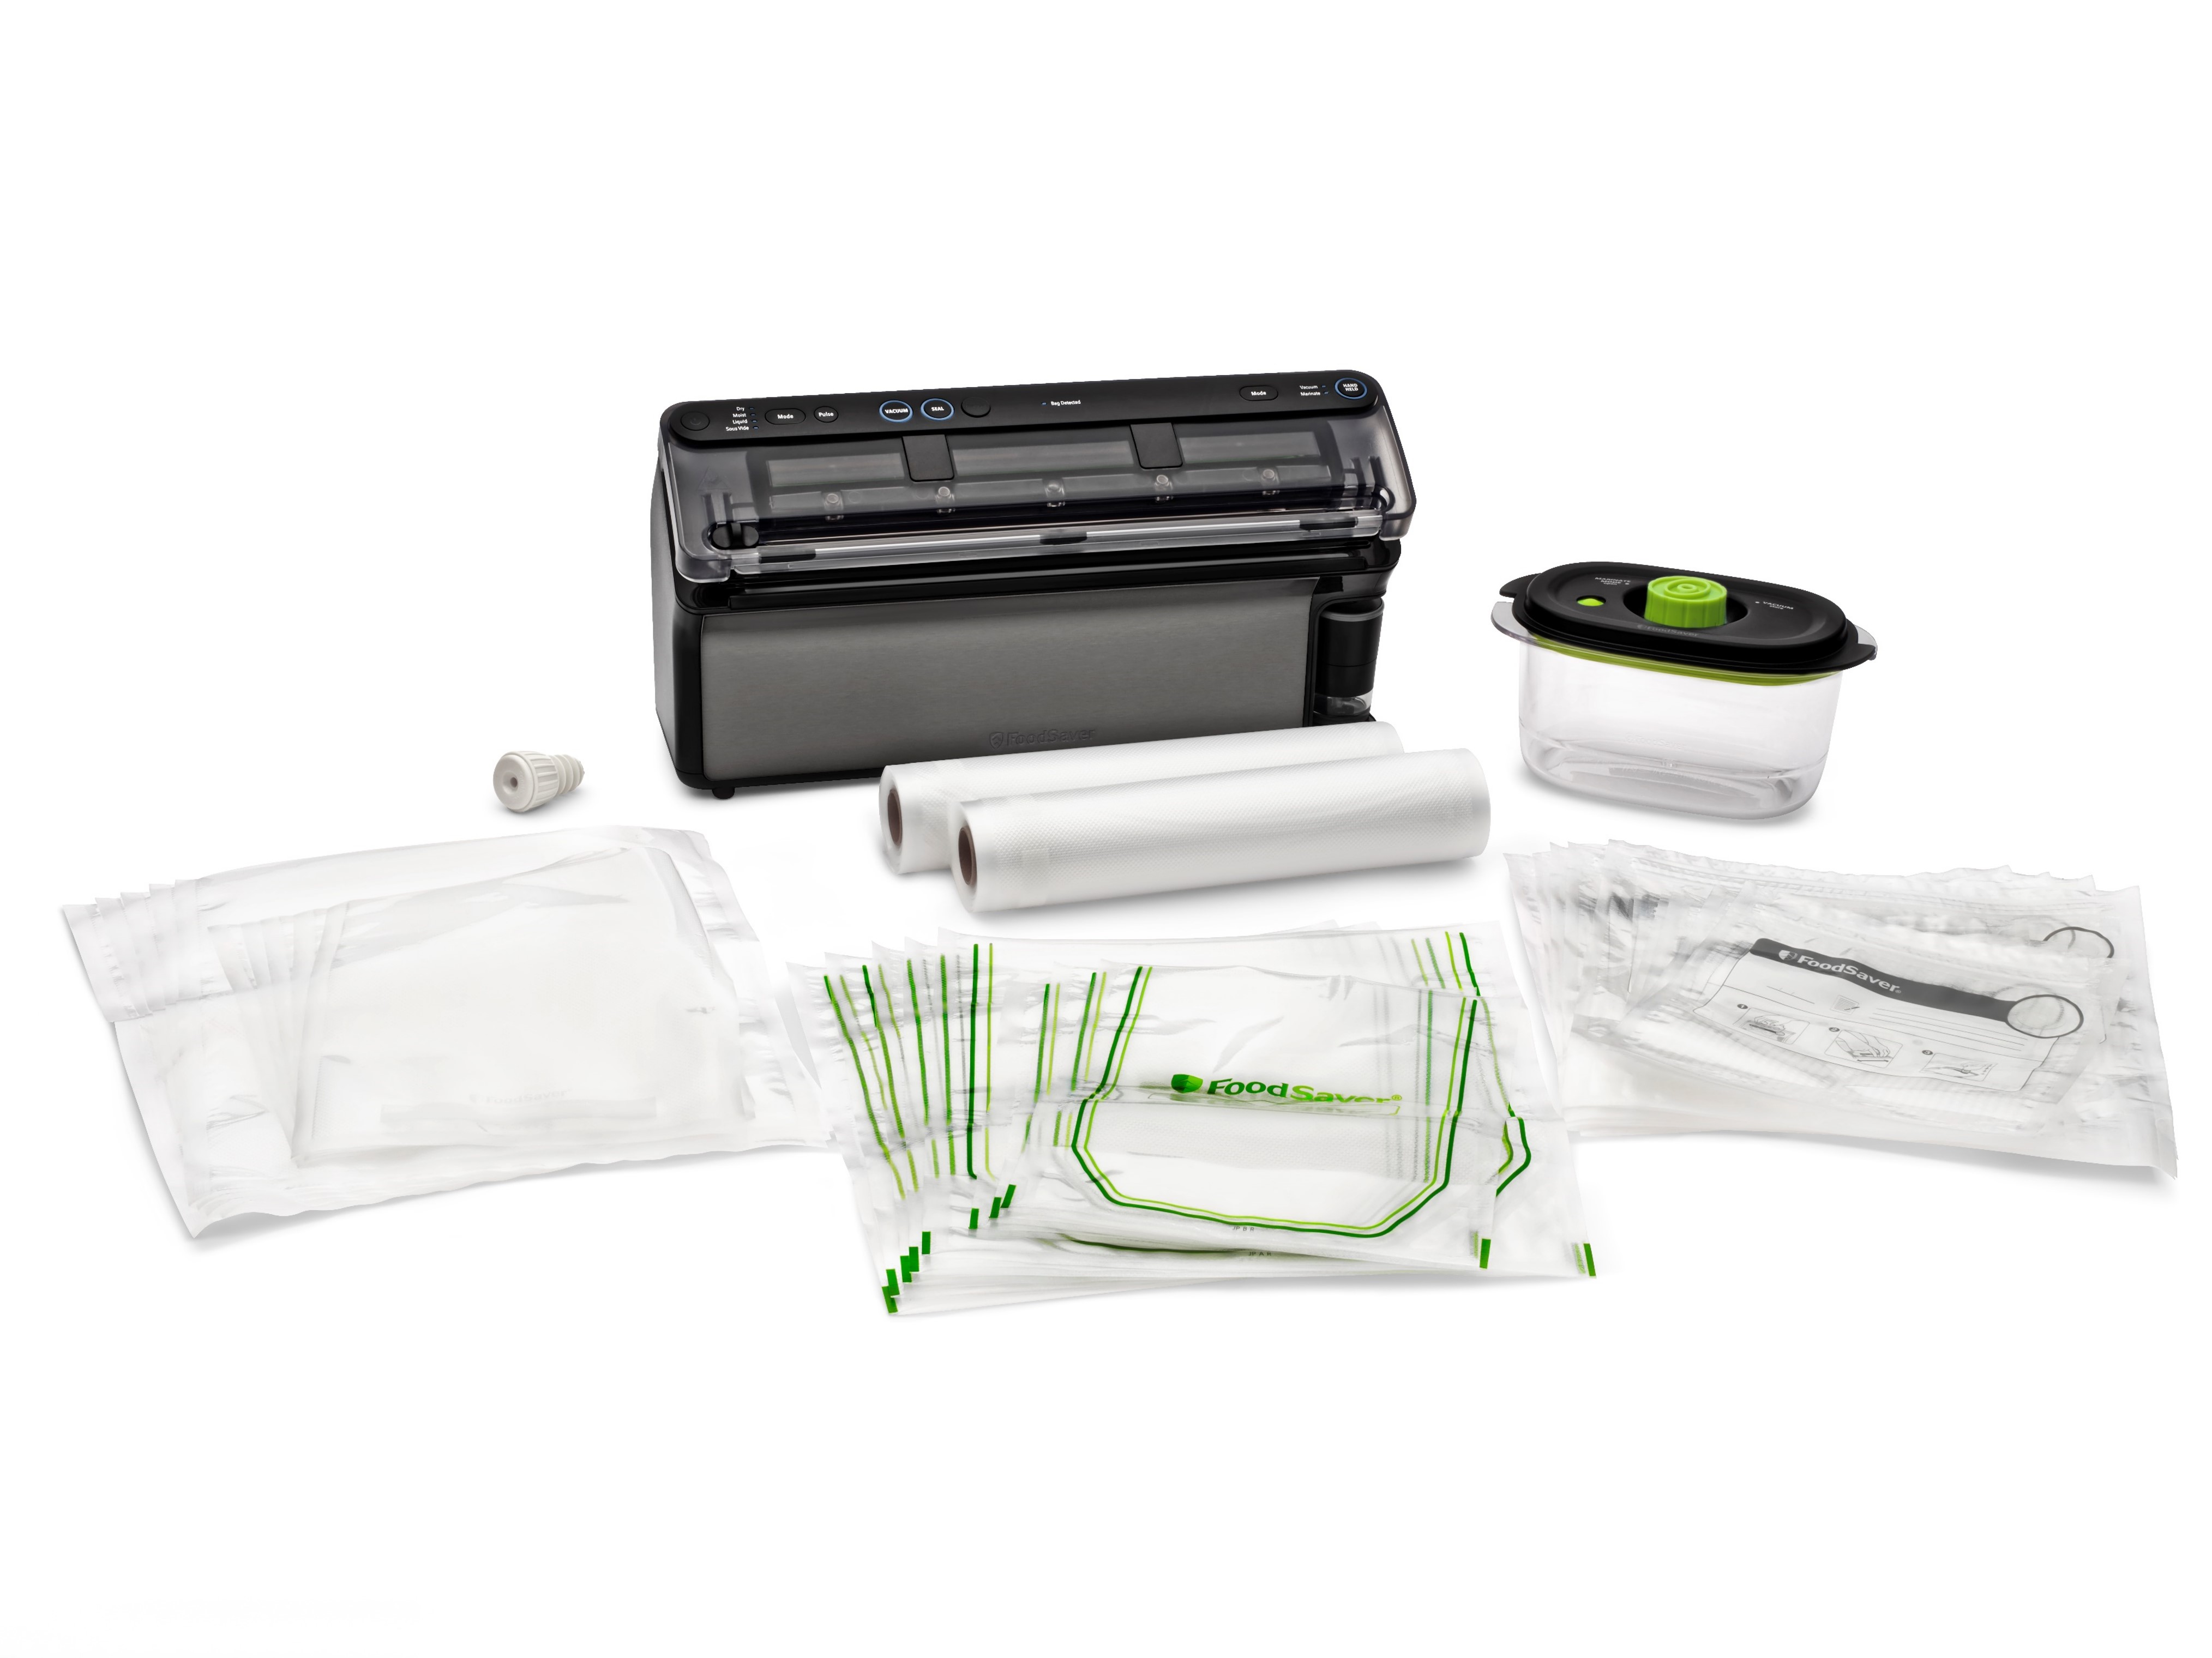 Foodsaver Everyday Vacuum Sealer With Precut Bags : Target